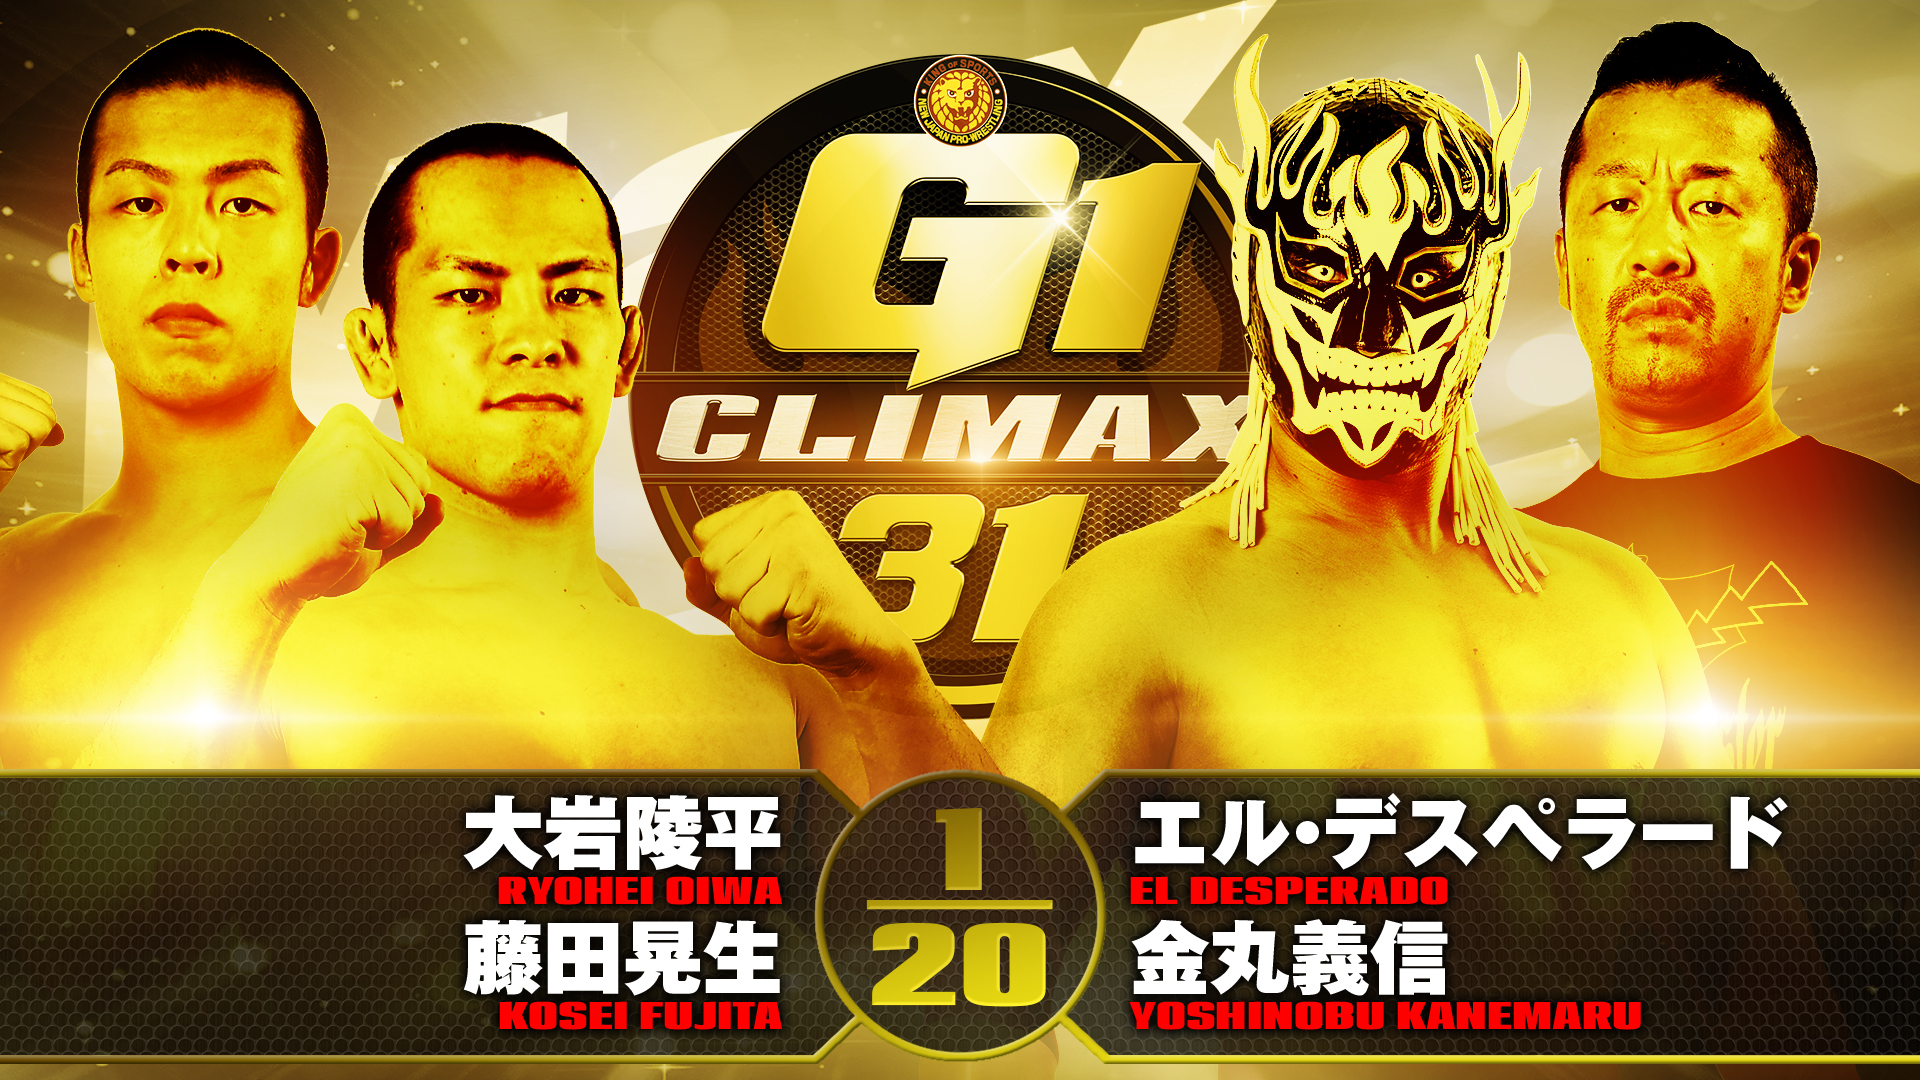 njpw g1 climax 31 tag team match